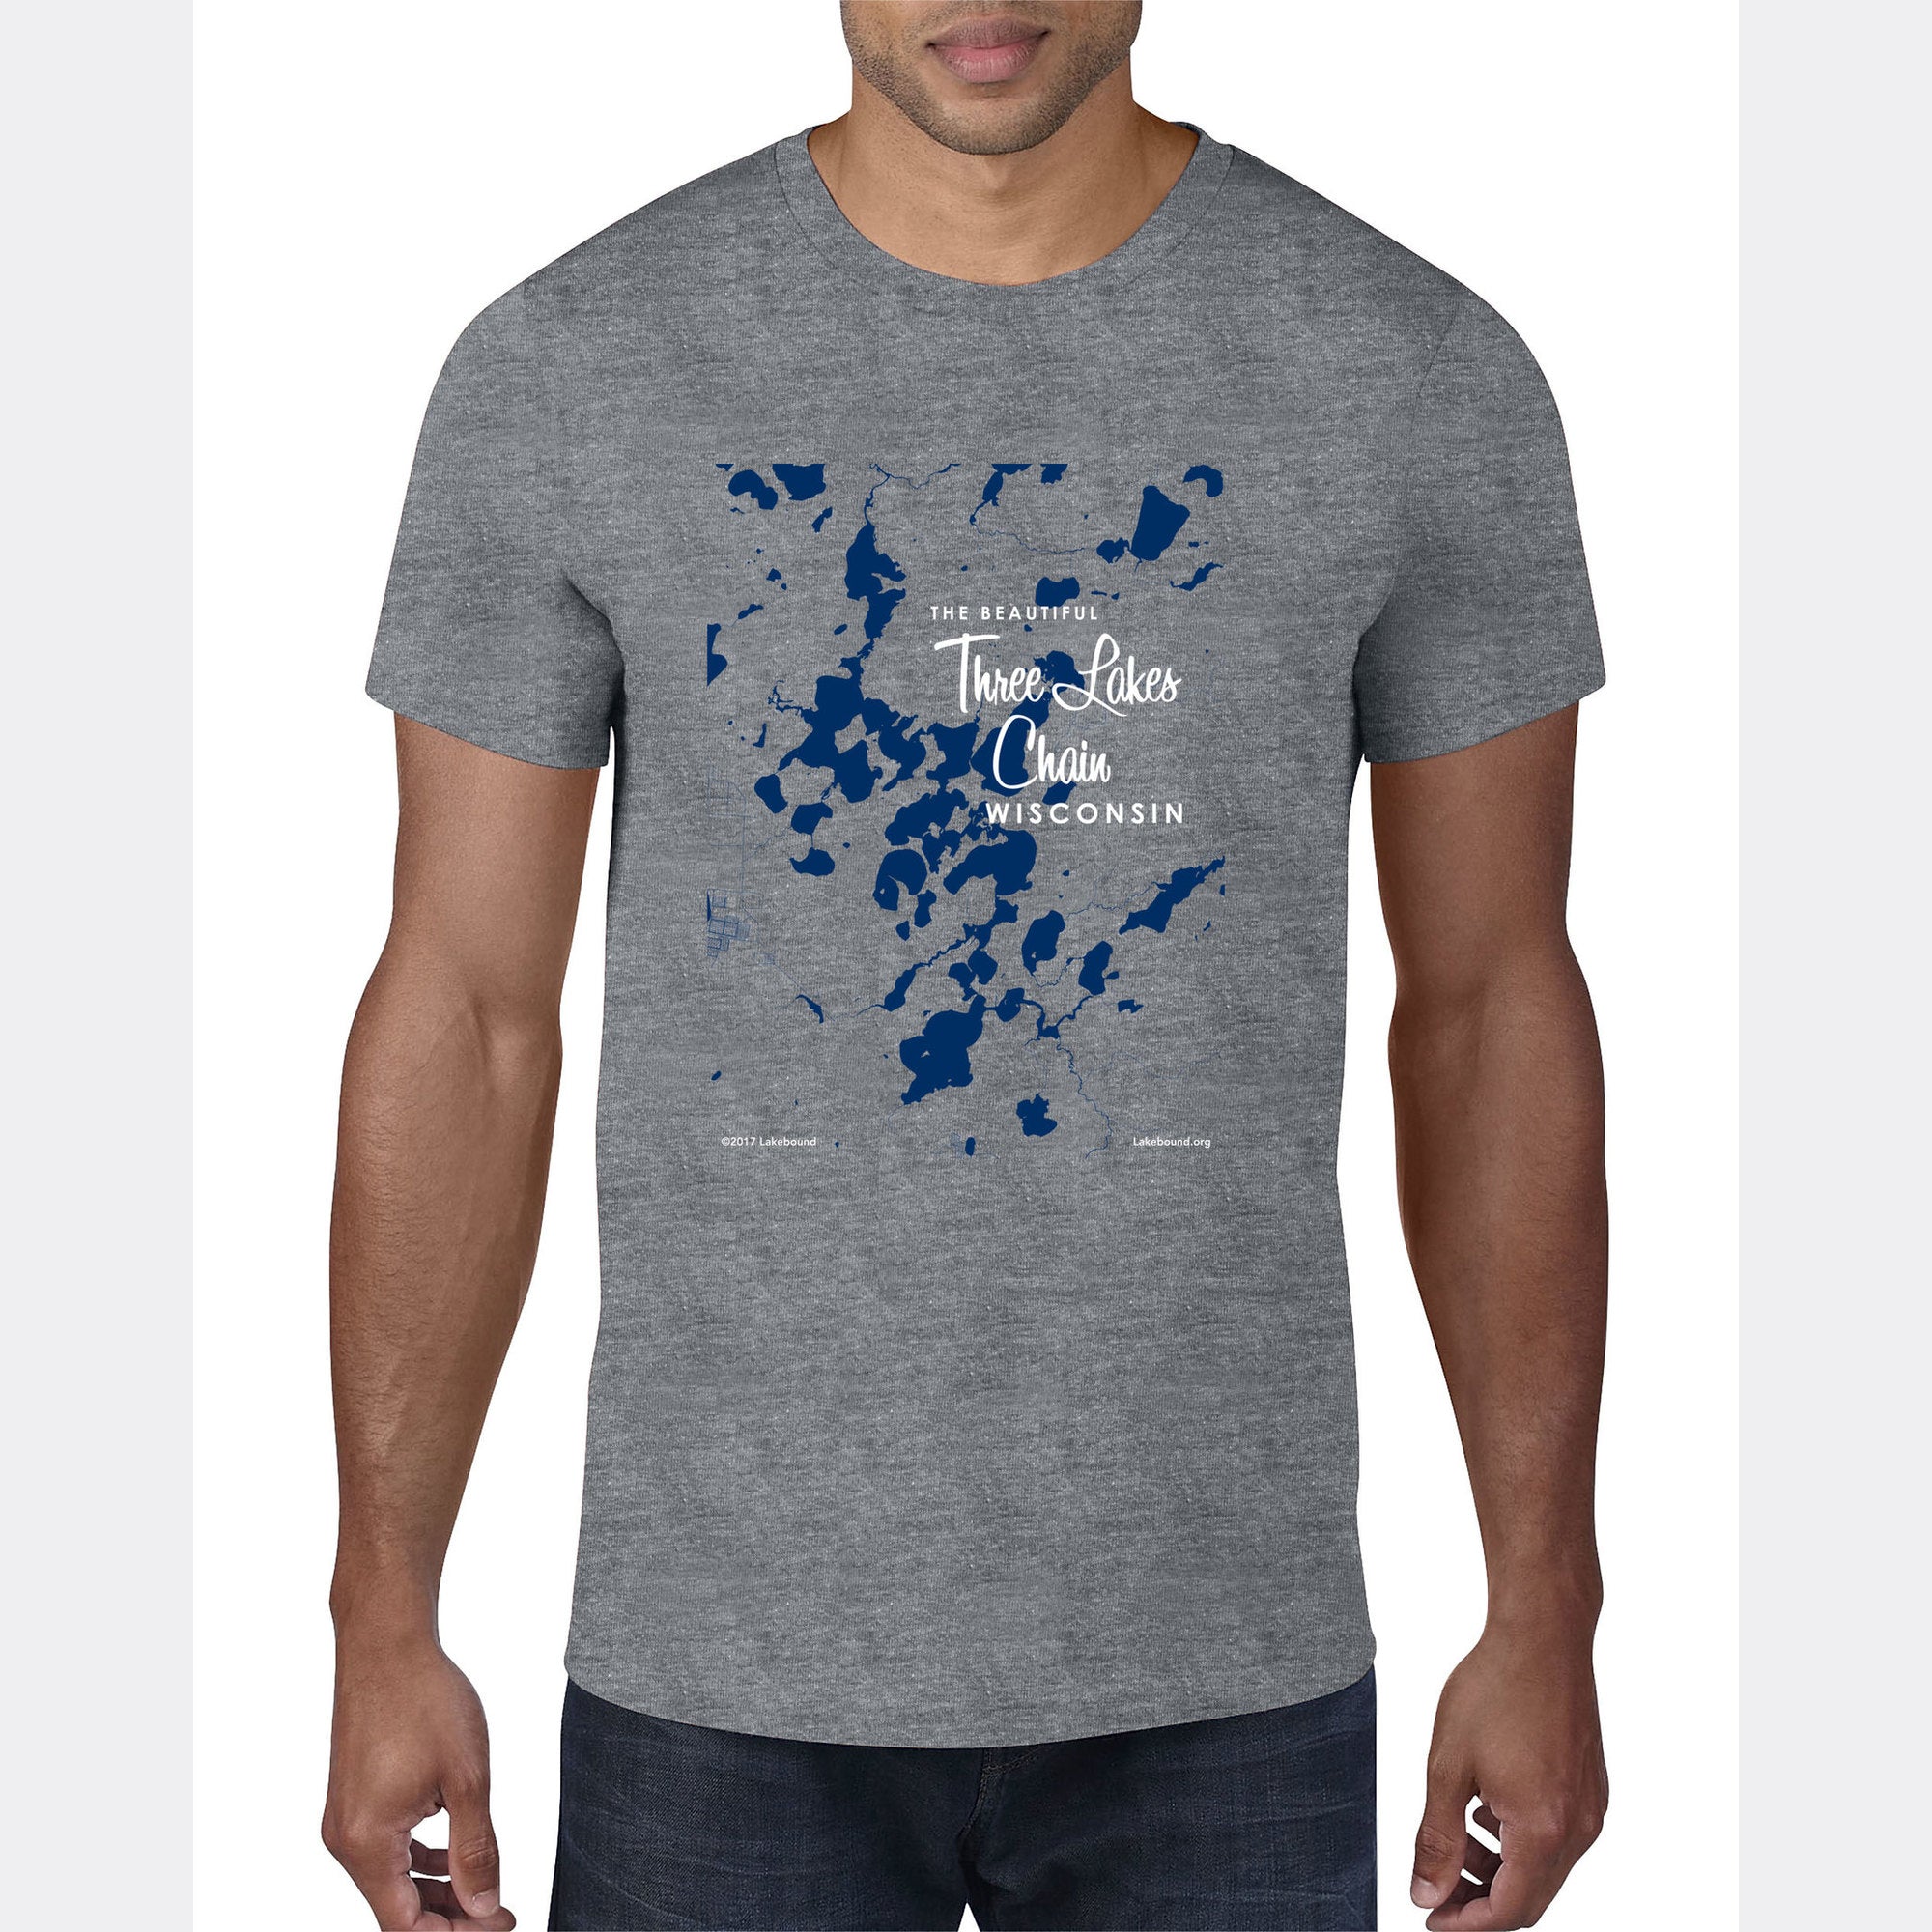 Three Lakes Chain Wisconsin, T-Shirt